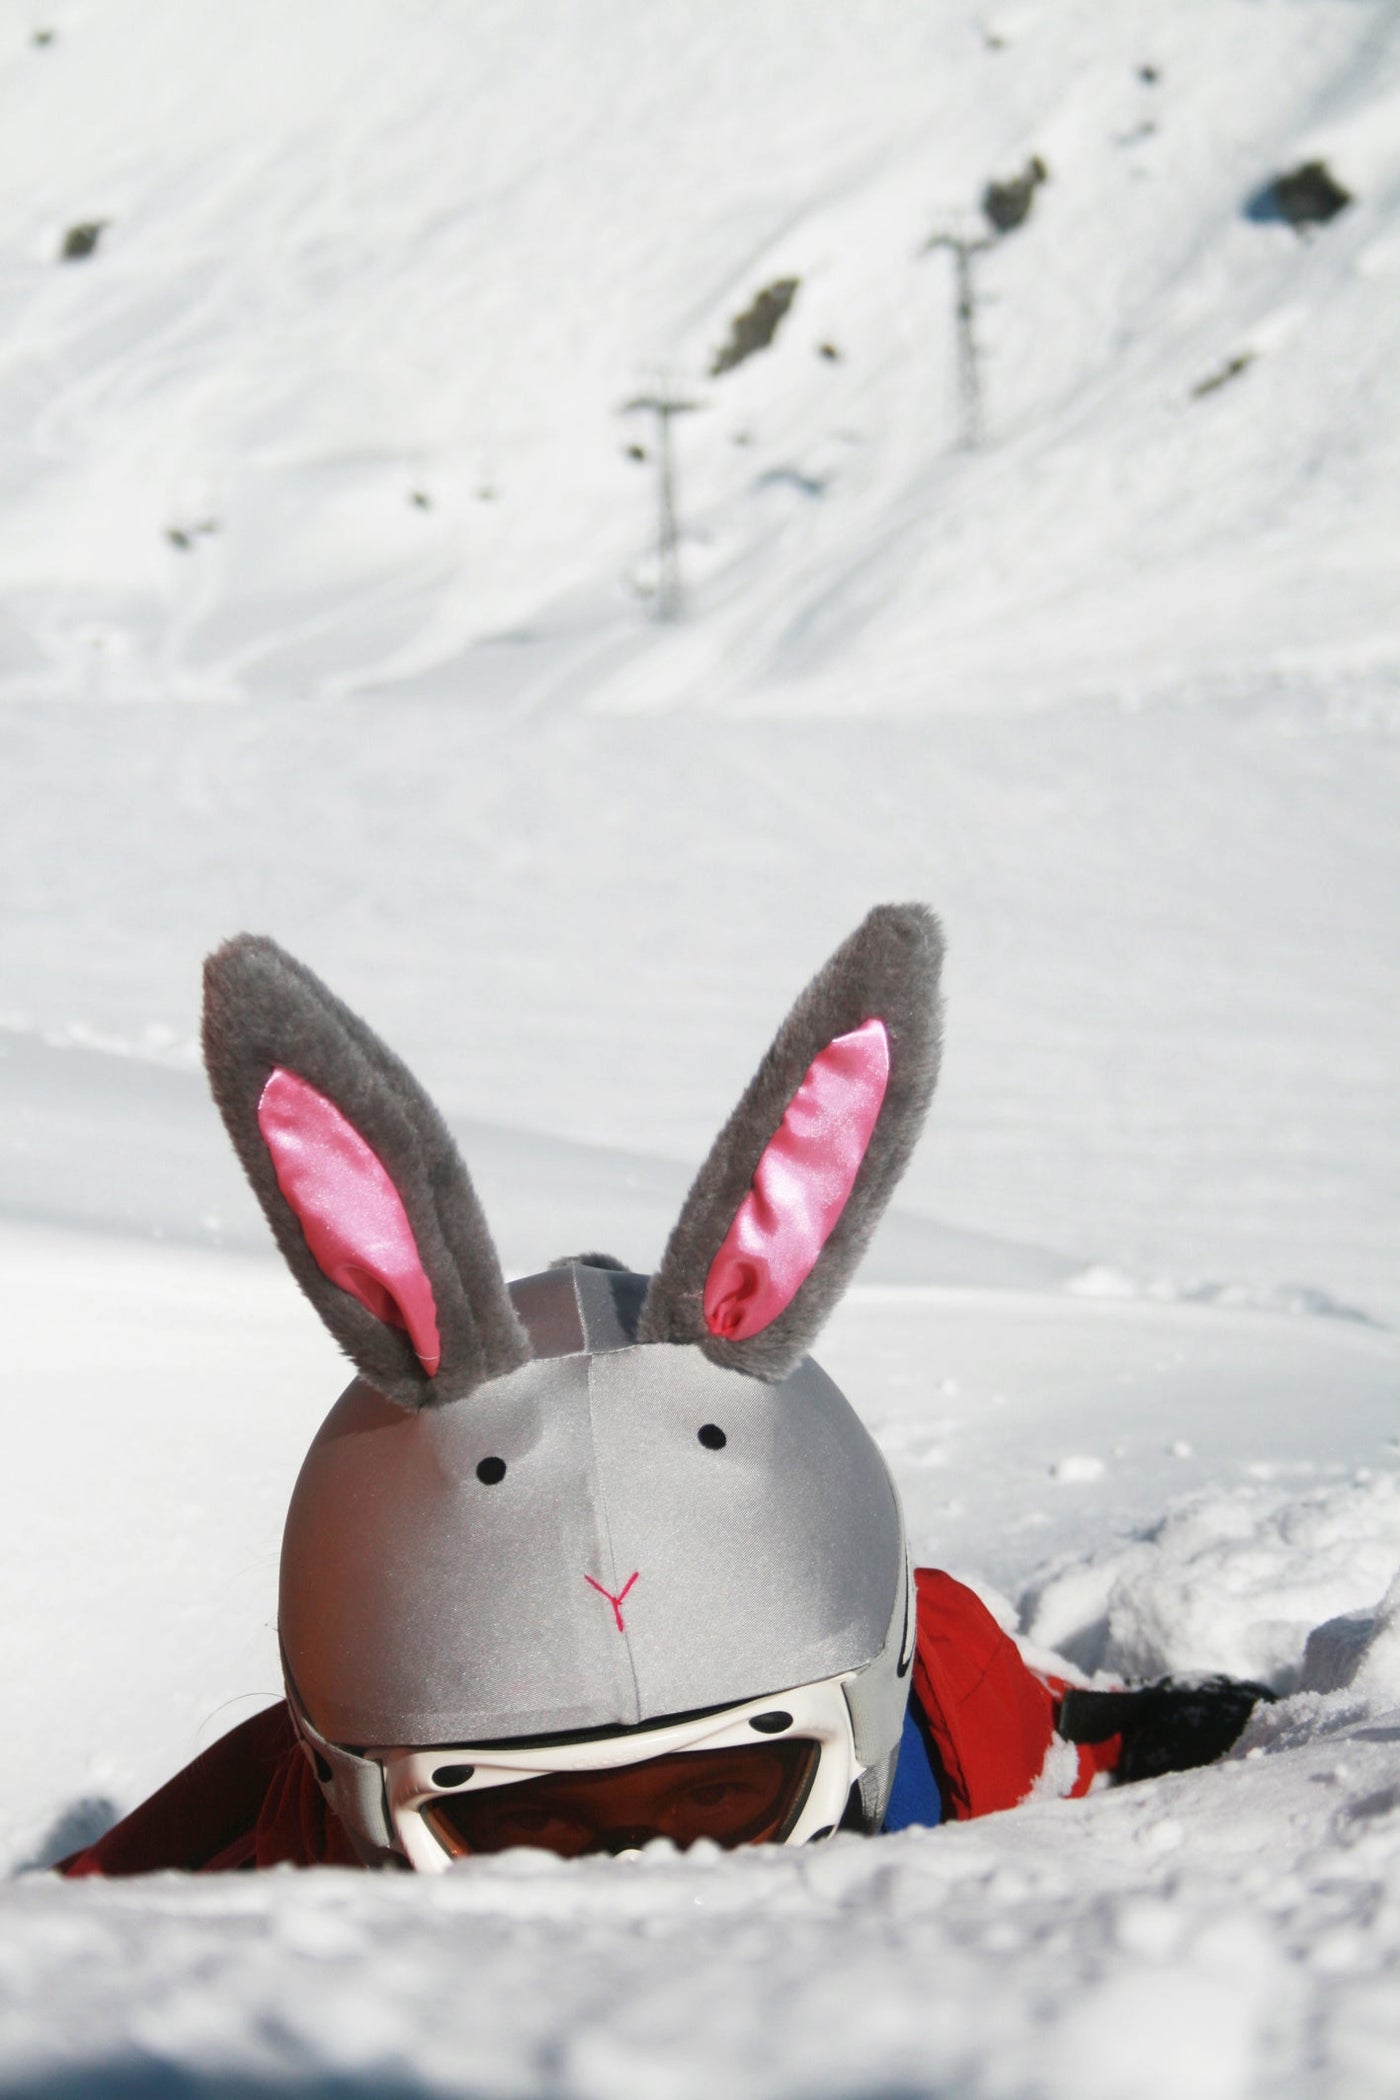 Coolcasc Animals Helmet Cover Bunny.